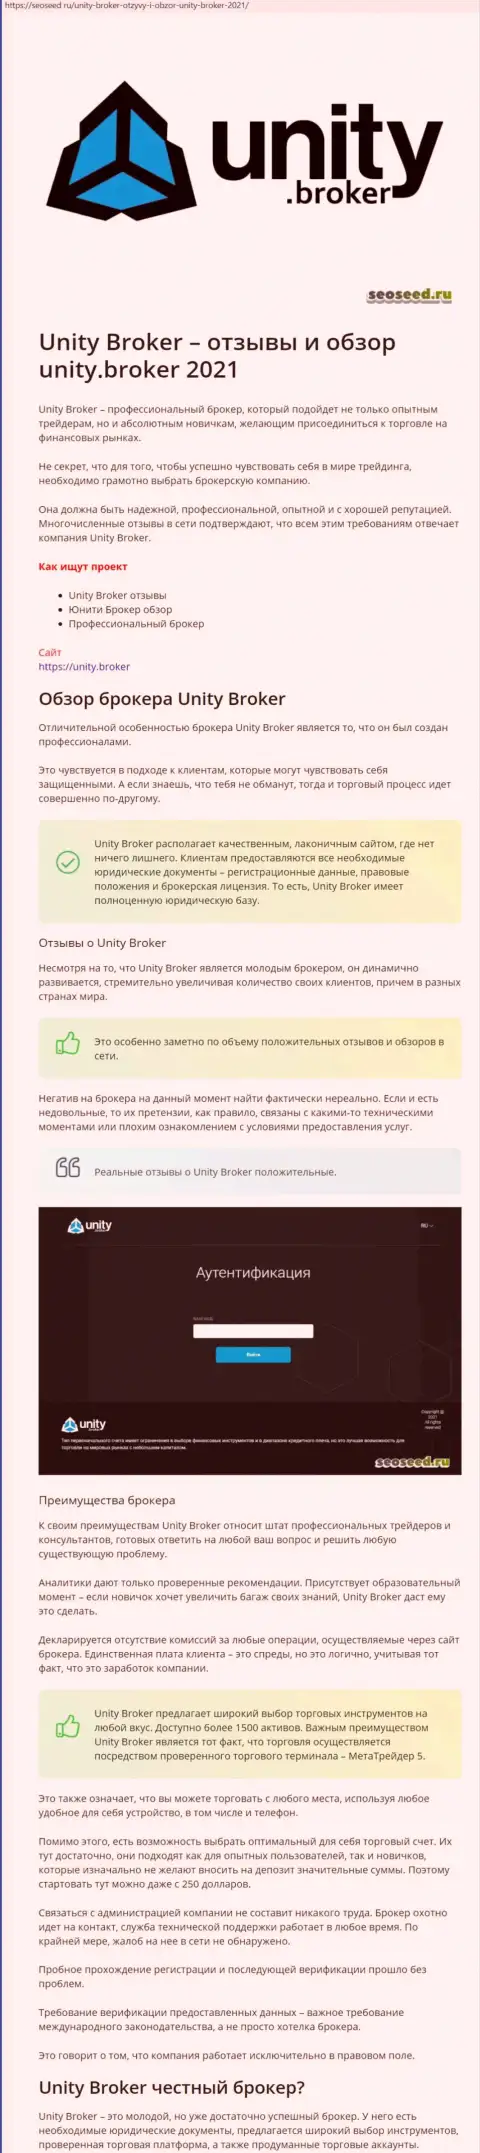 Информация о forex брокерской площадке Unity Broker на веб-сервисе seoseed ru